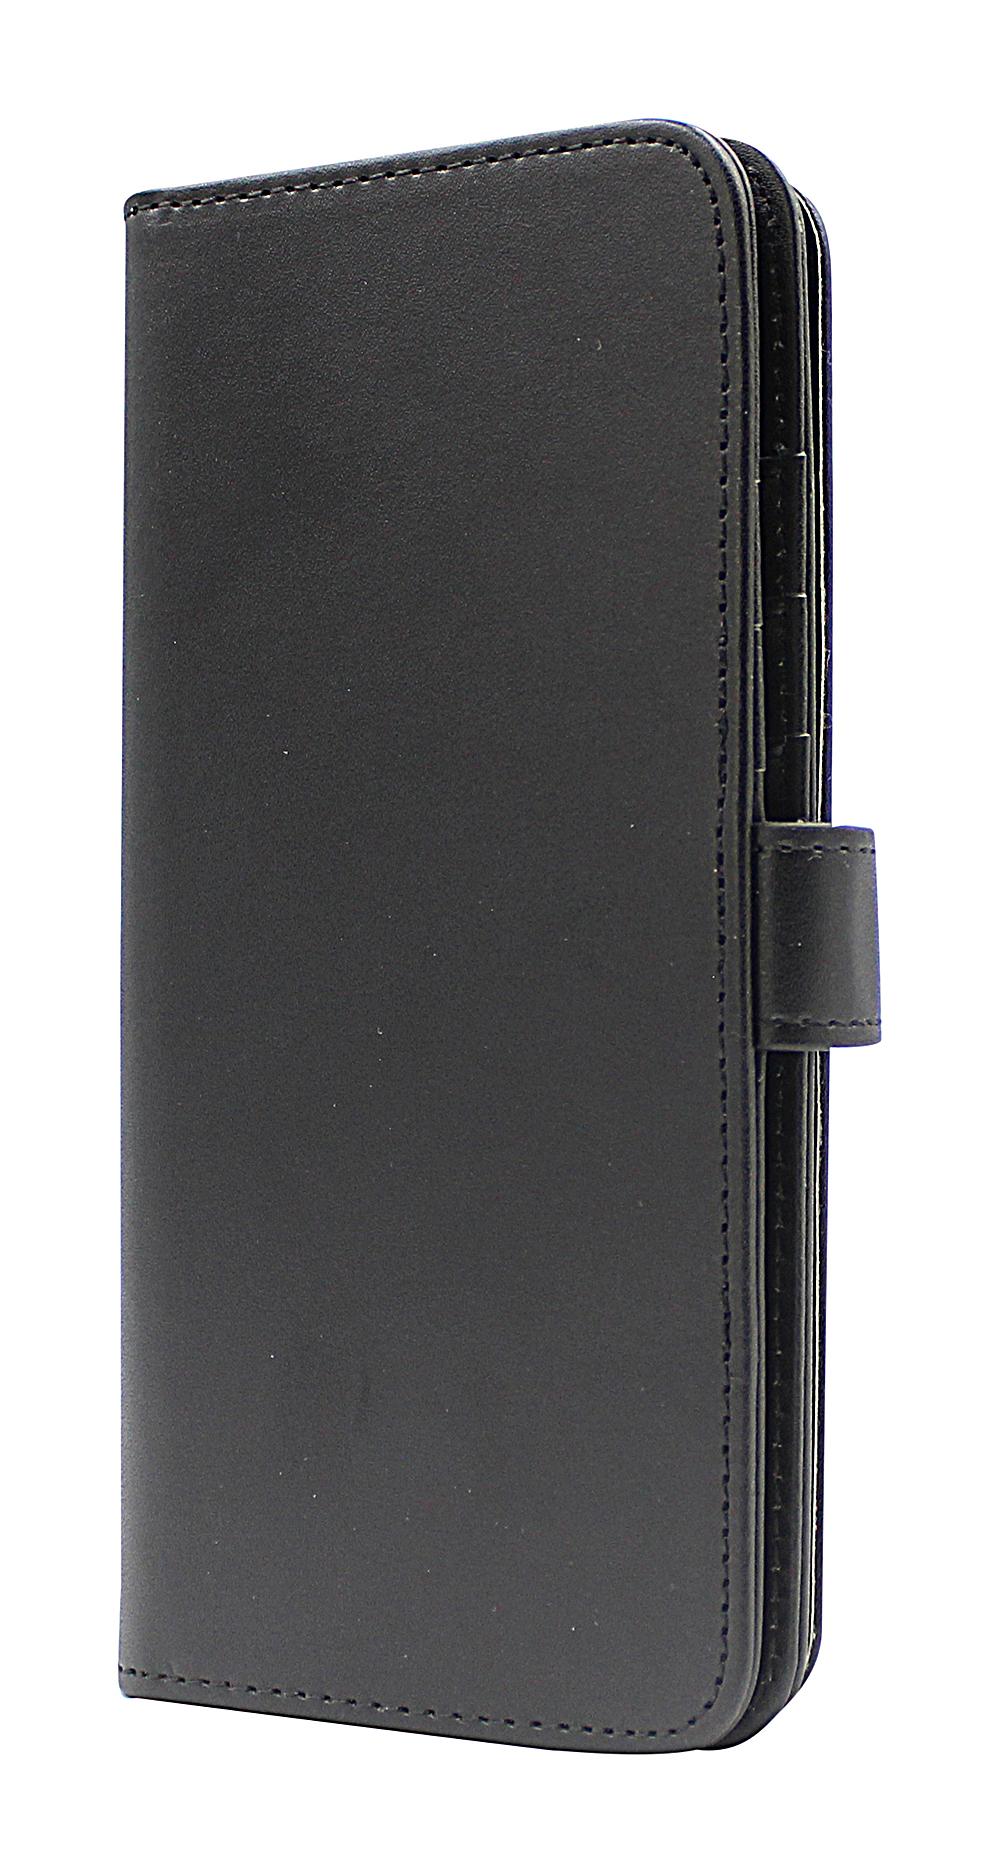 Skimblocker XL Wallet Motorola Moto G200